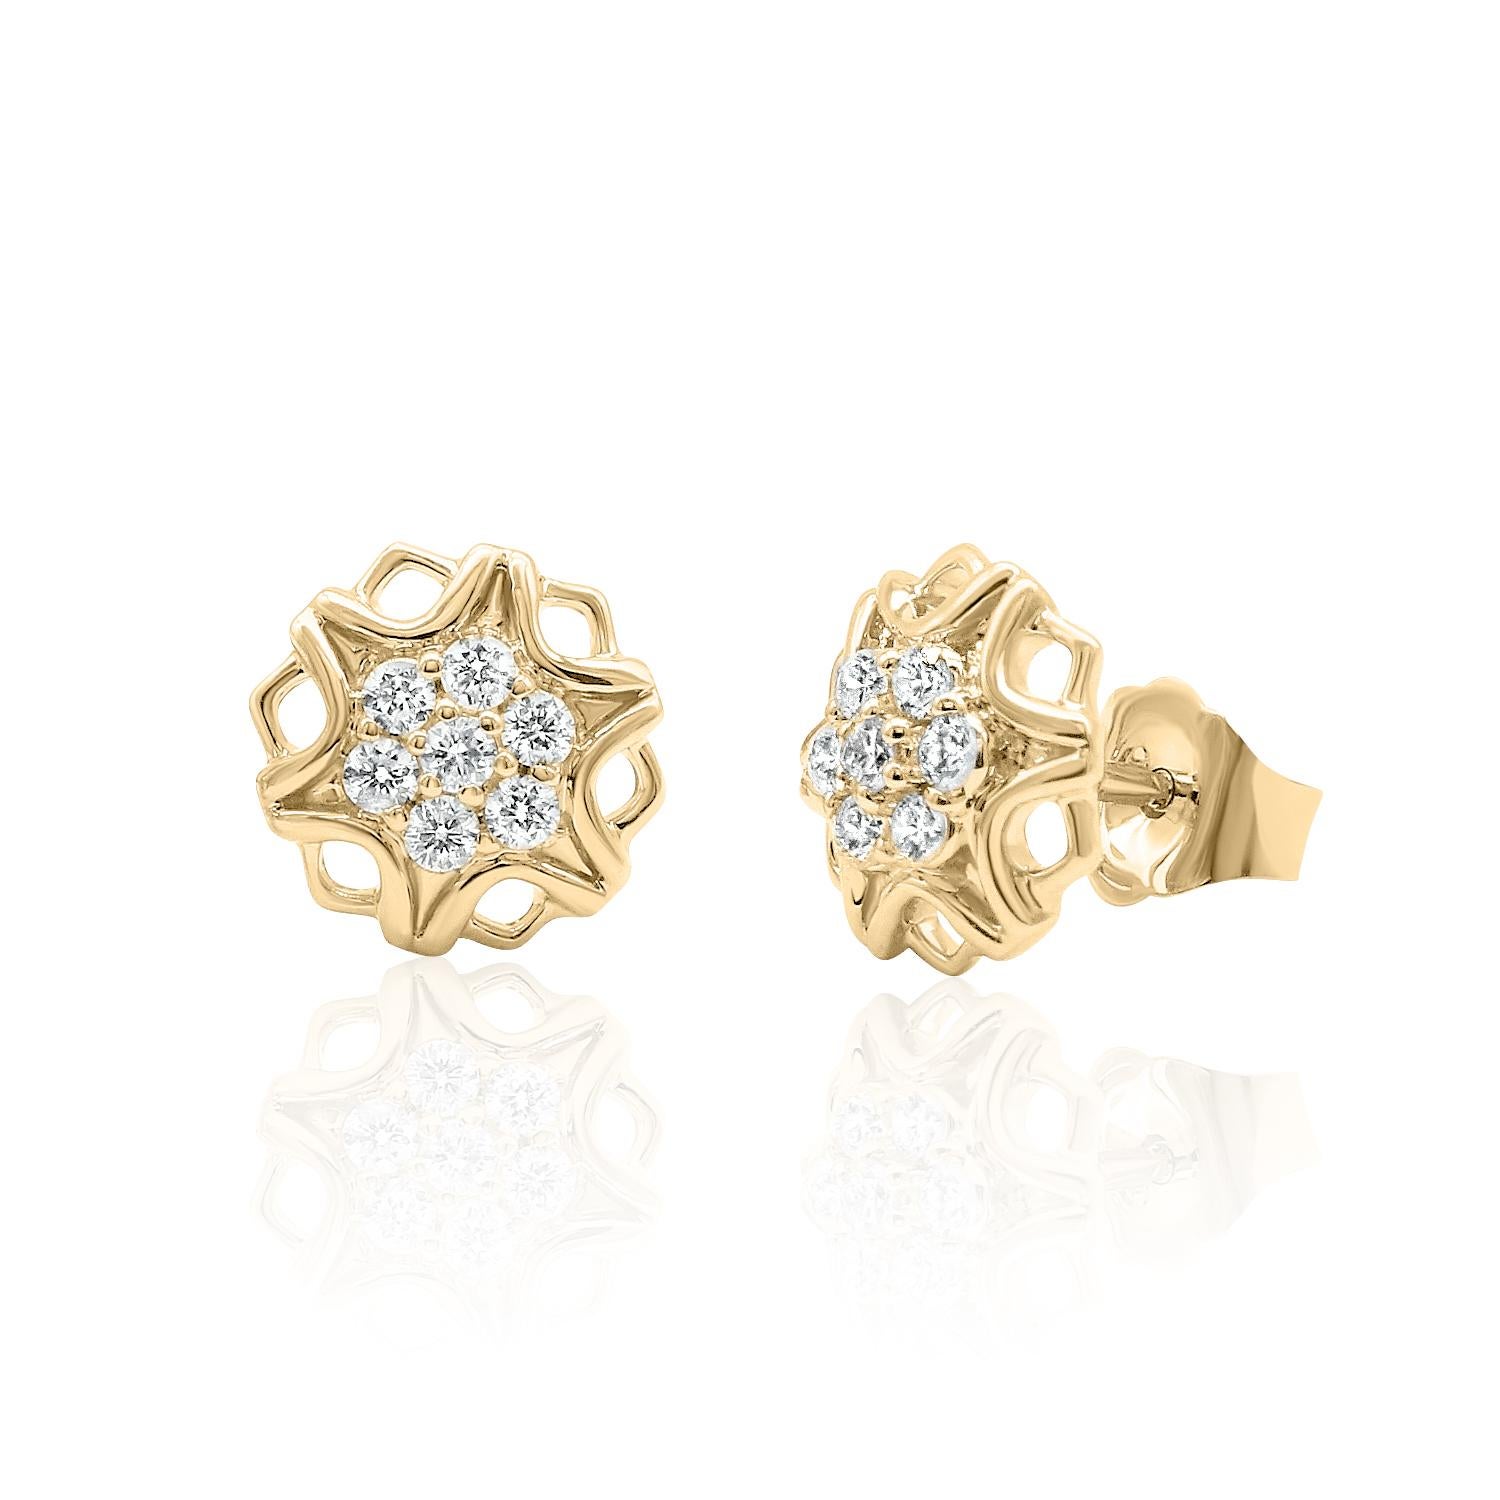 Contemporary Framed Star Diamond Earrings 14K White, Yellow, and Rose Gold